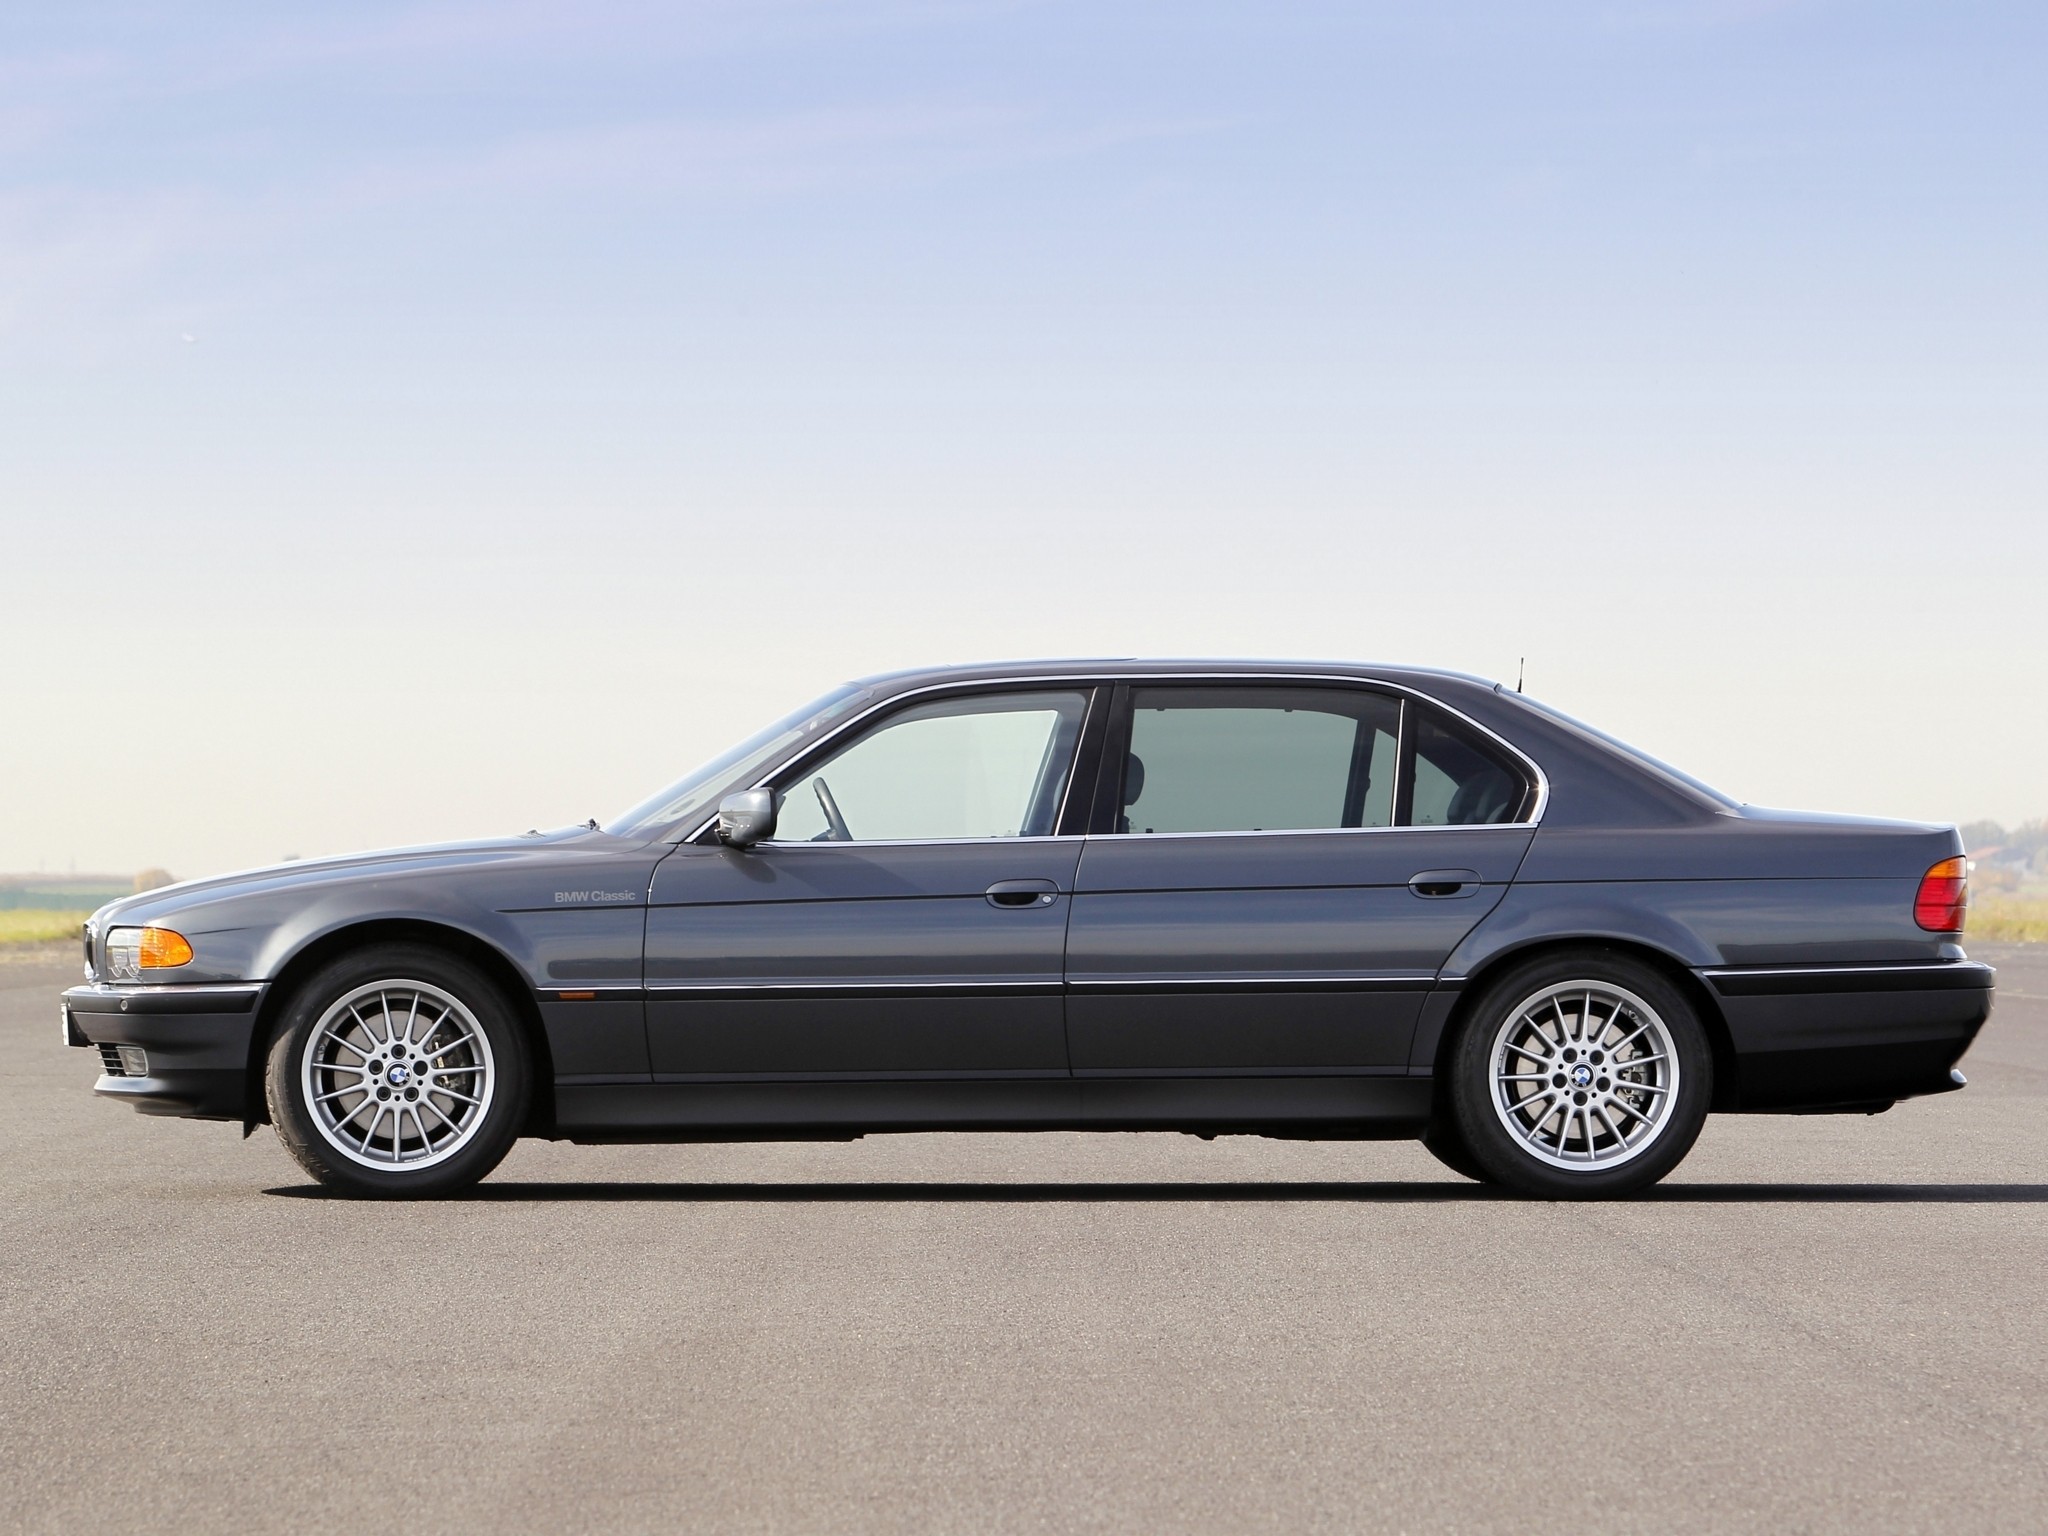 BMW 7 Series (E38) - 1998, 1999, 2000, 2001 - autoevolution